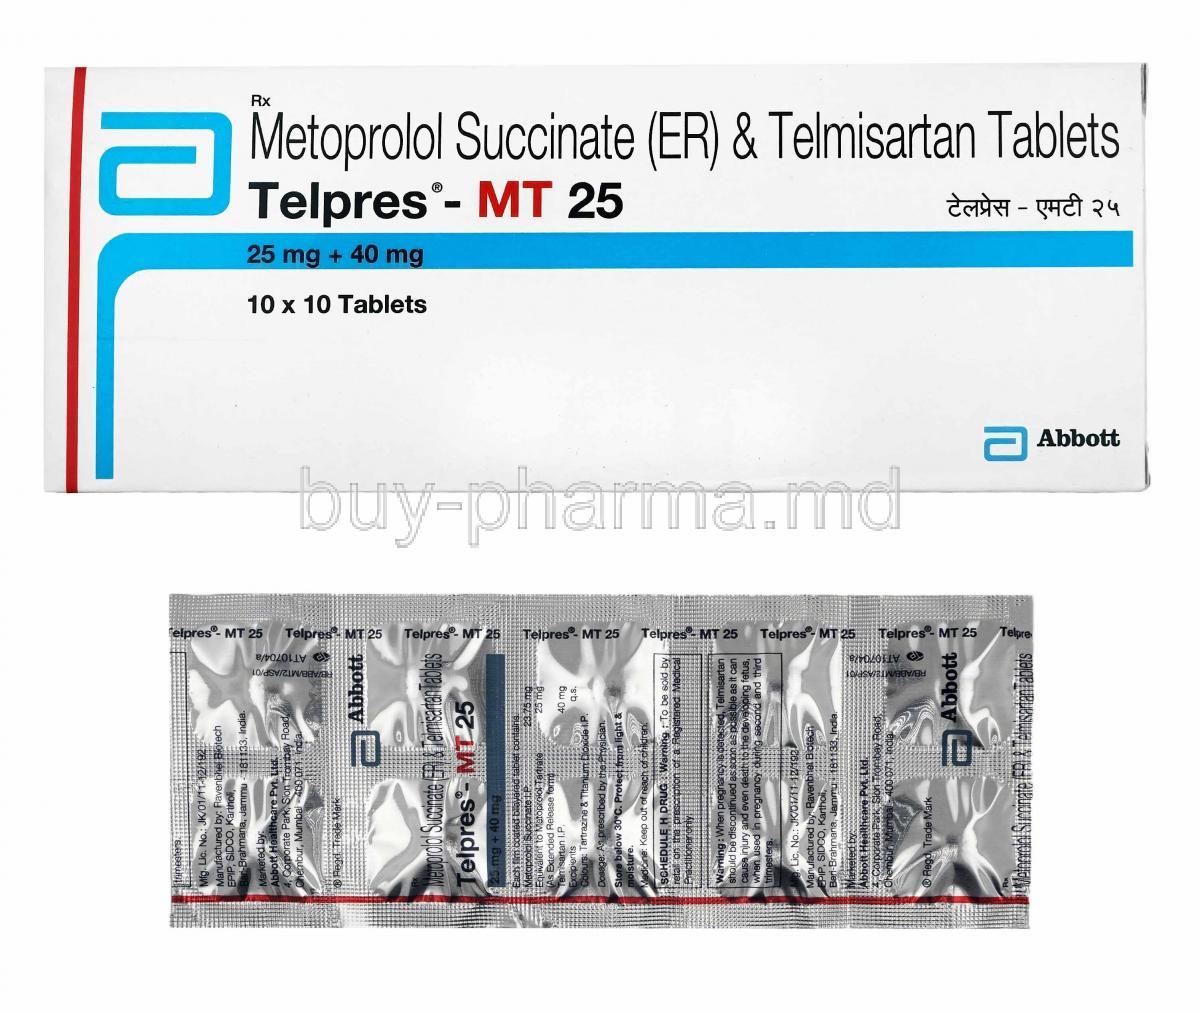 Telpres-MT, Telmisartan and Metoprolol Succinate 25mg box and tablets